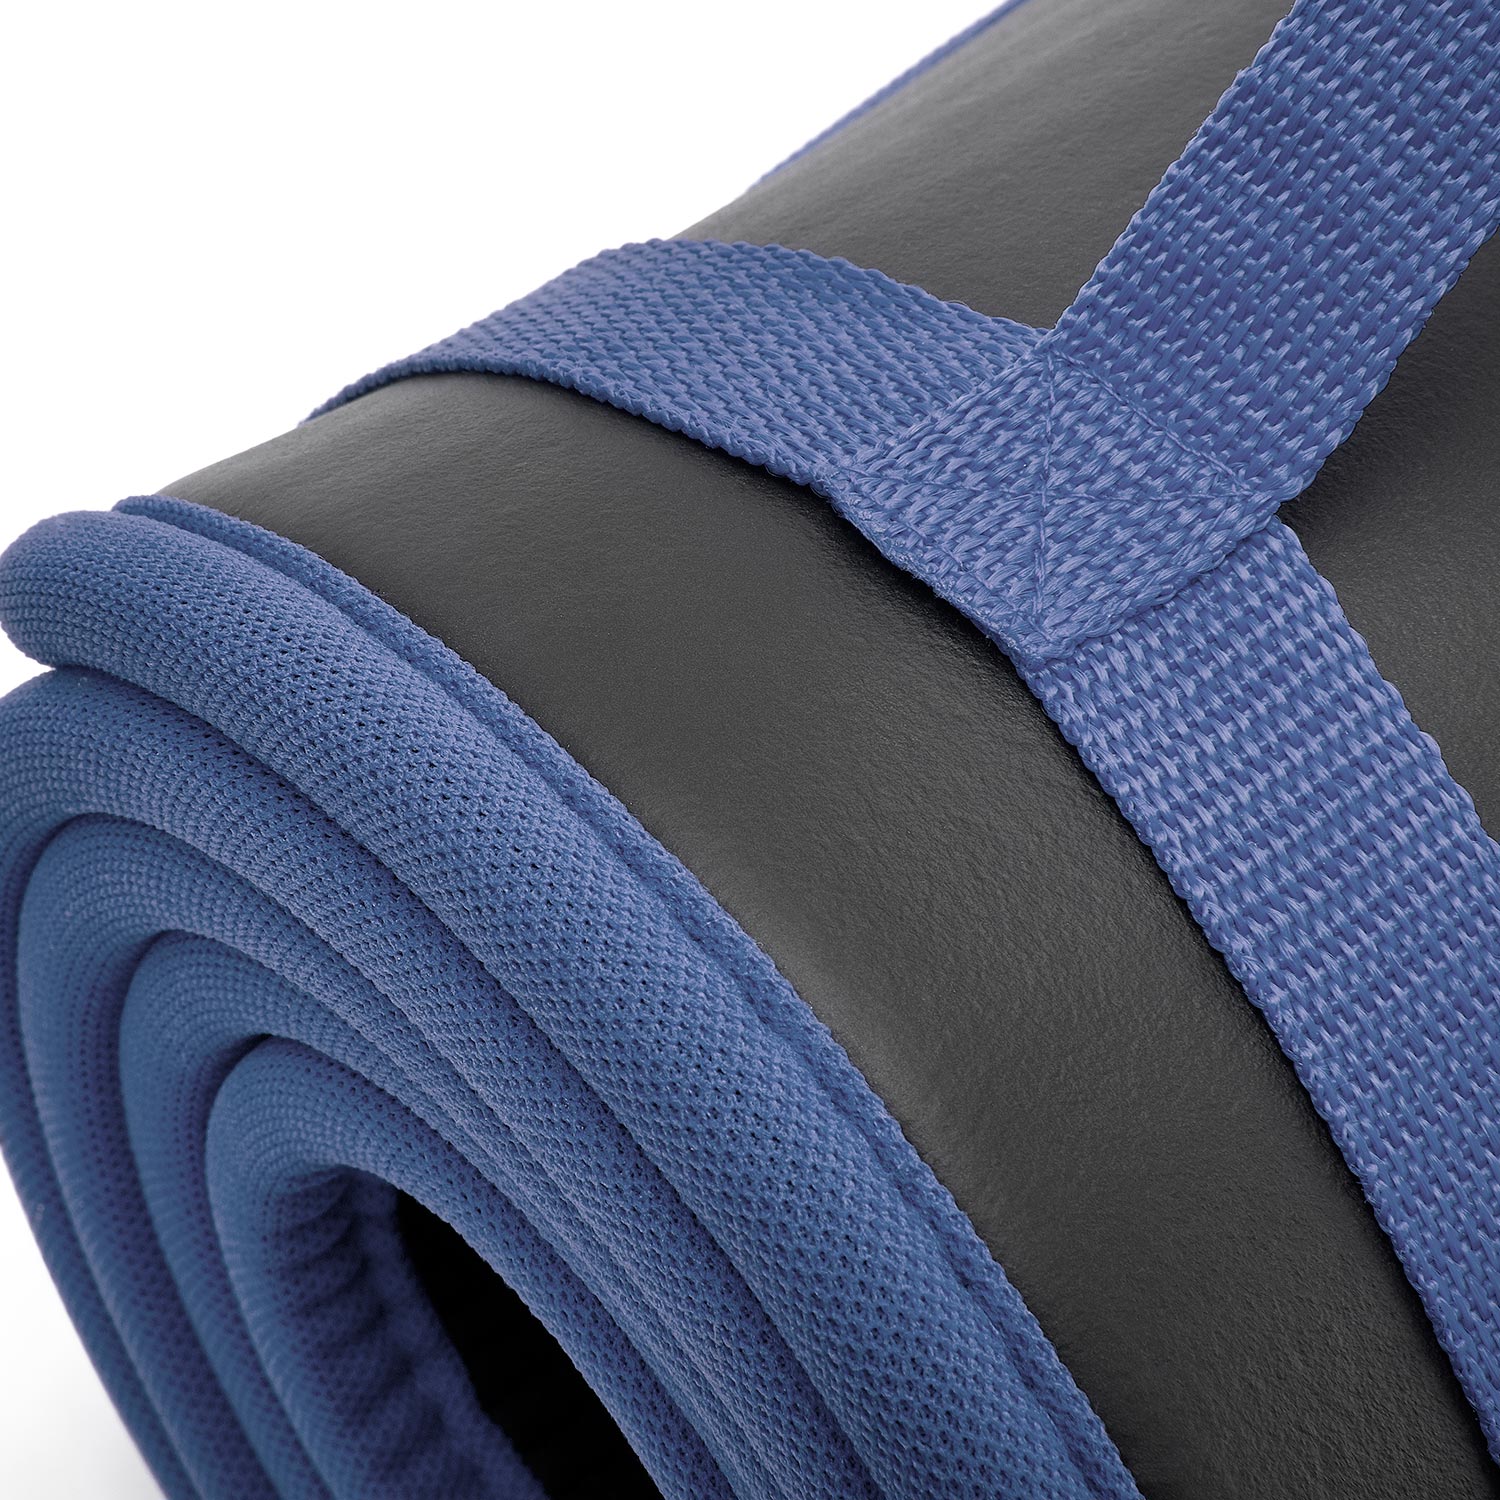 Adidas core training mat blue 10 mm